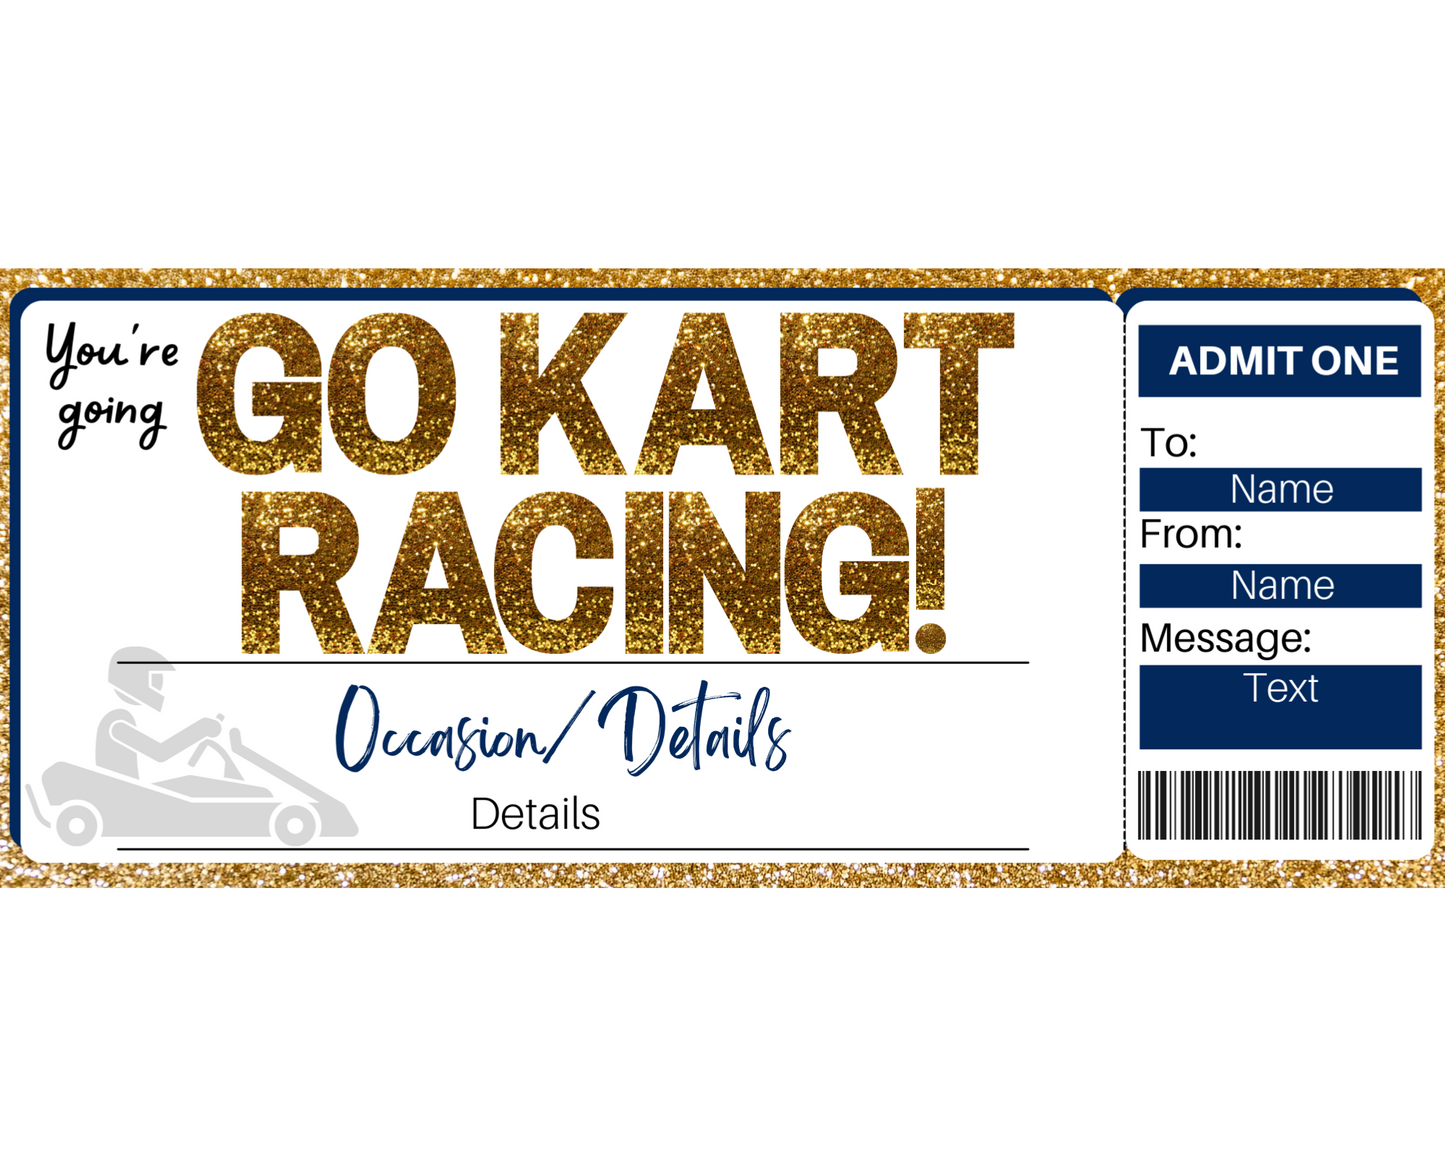 Go Karting Gift Ticket